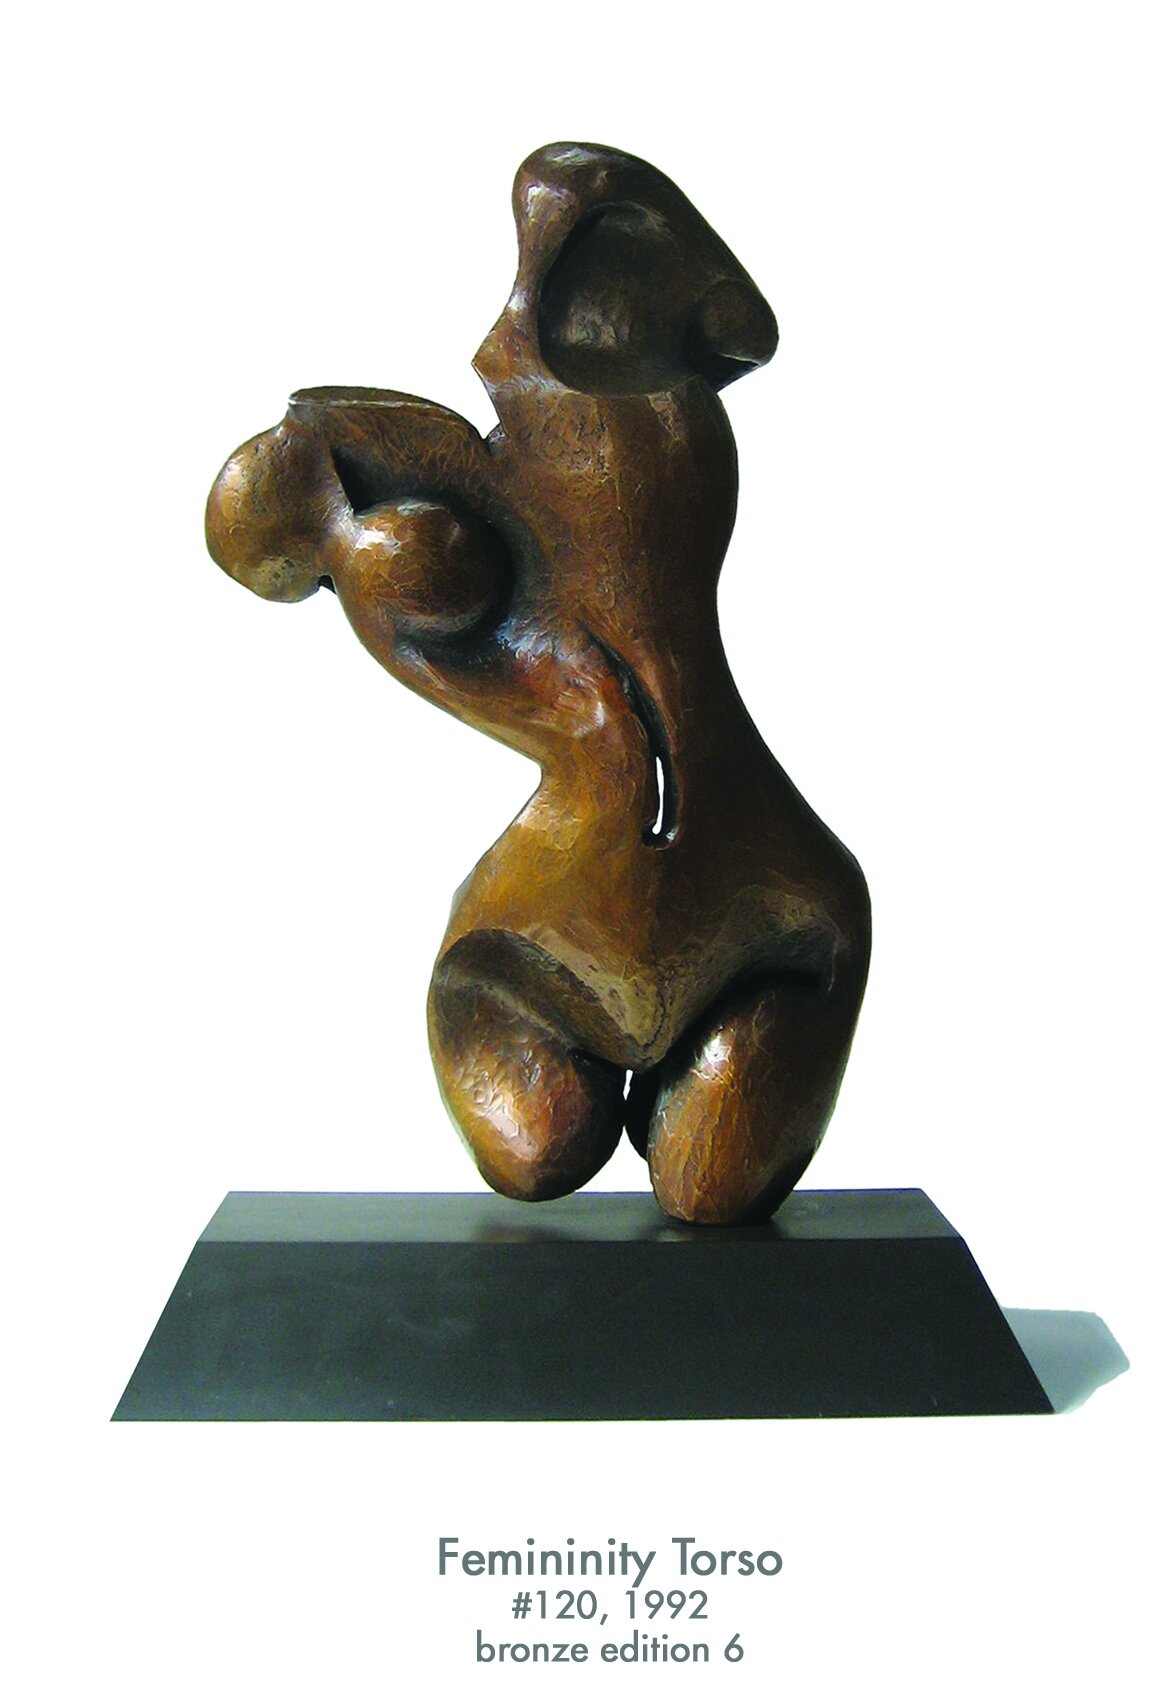 Femininity Torso, 1992, bronze, #120